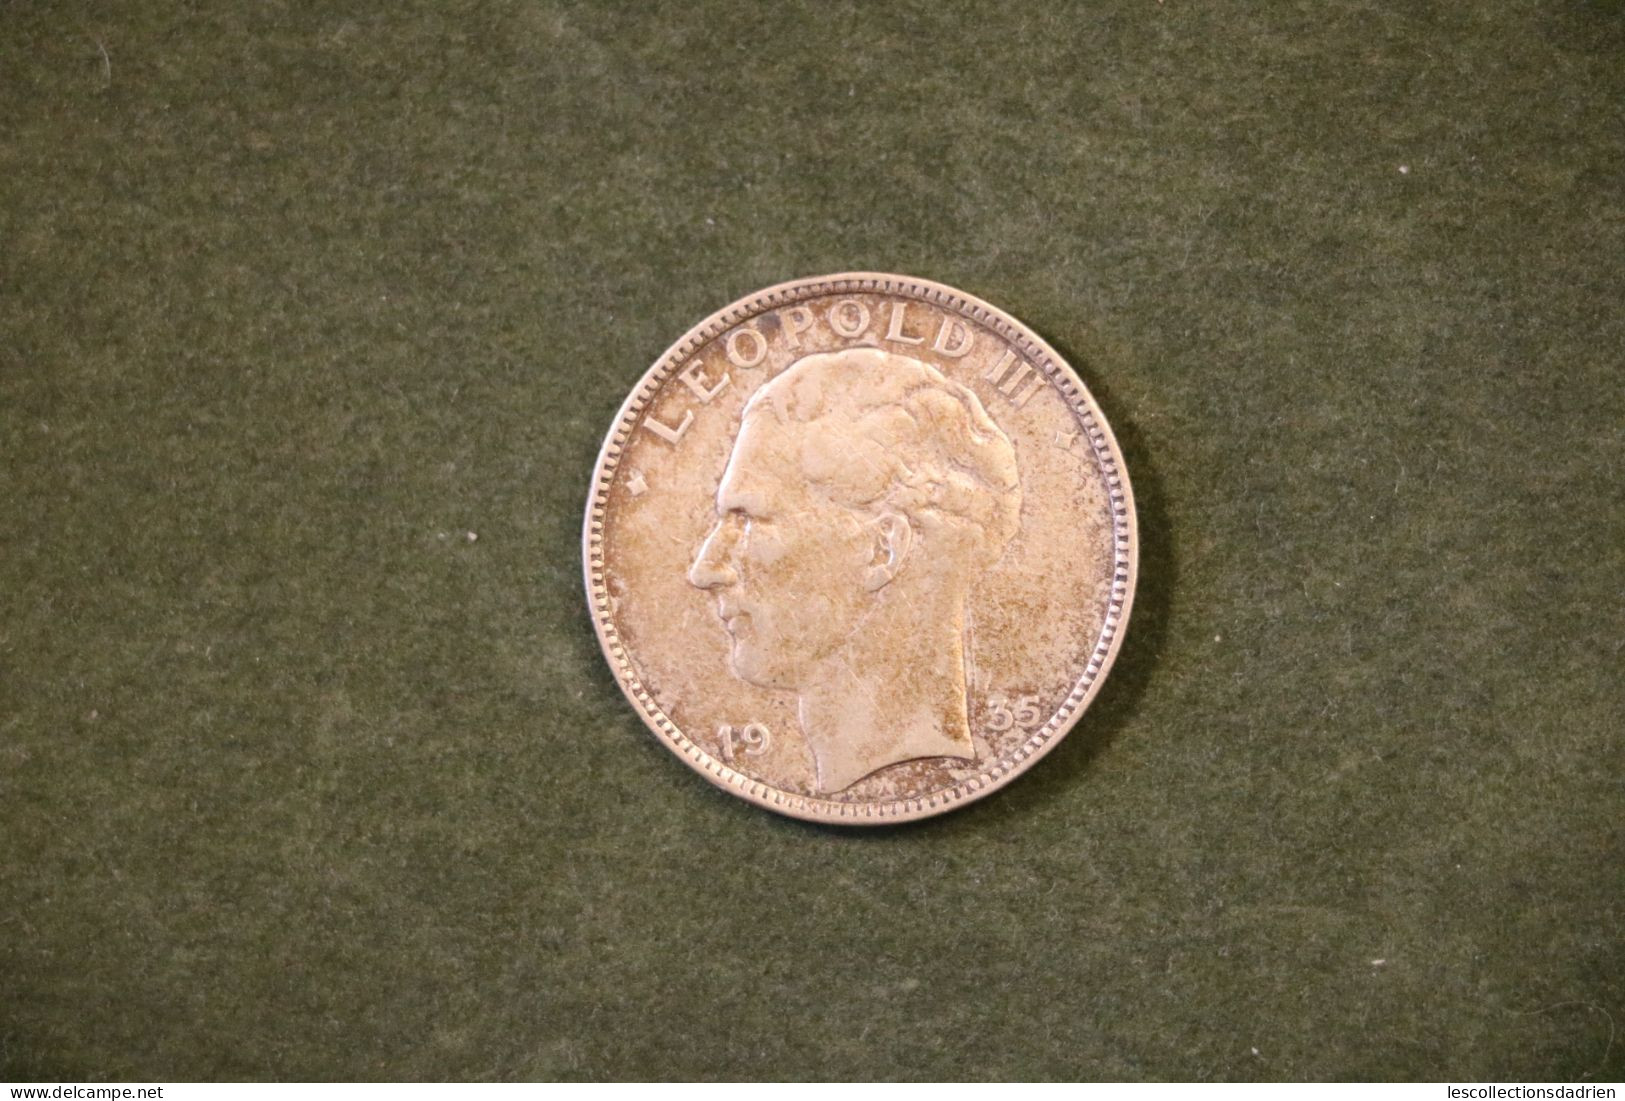 Pièce En Argent Belgique 20 Francs 1935  -  Belgian Silver Coin /2 - 20 Francs